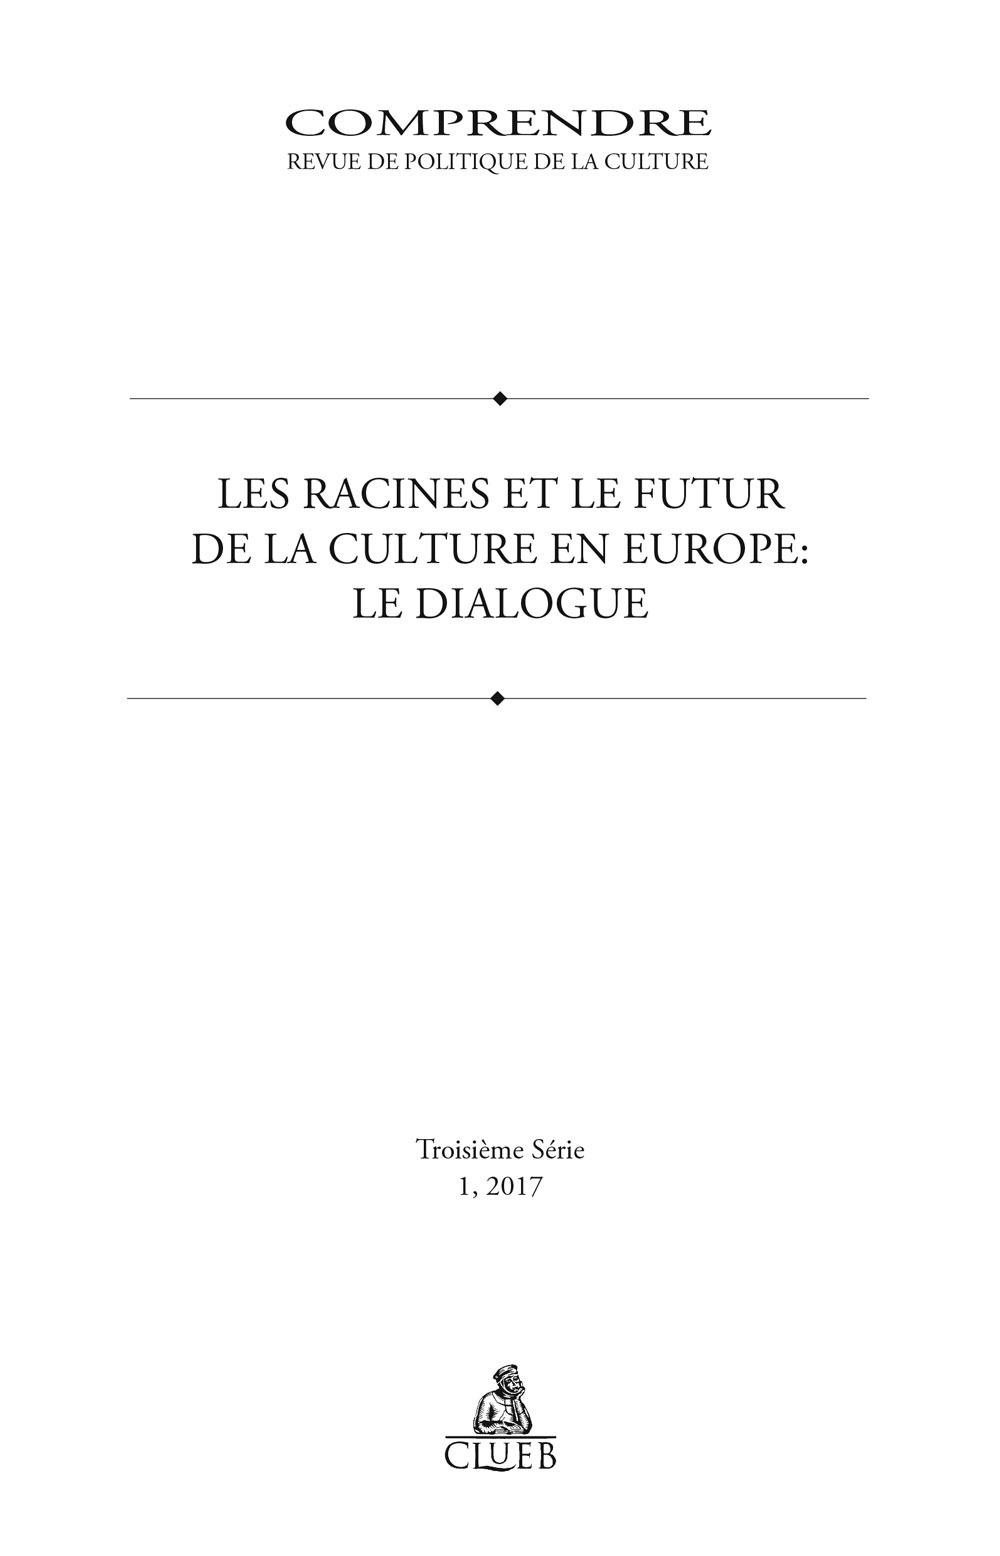 Comprendre. Revue de politique de la culture (2017). Vol. 1: Les racines et le futur de la culture en Europe. Le dialogue